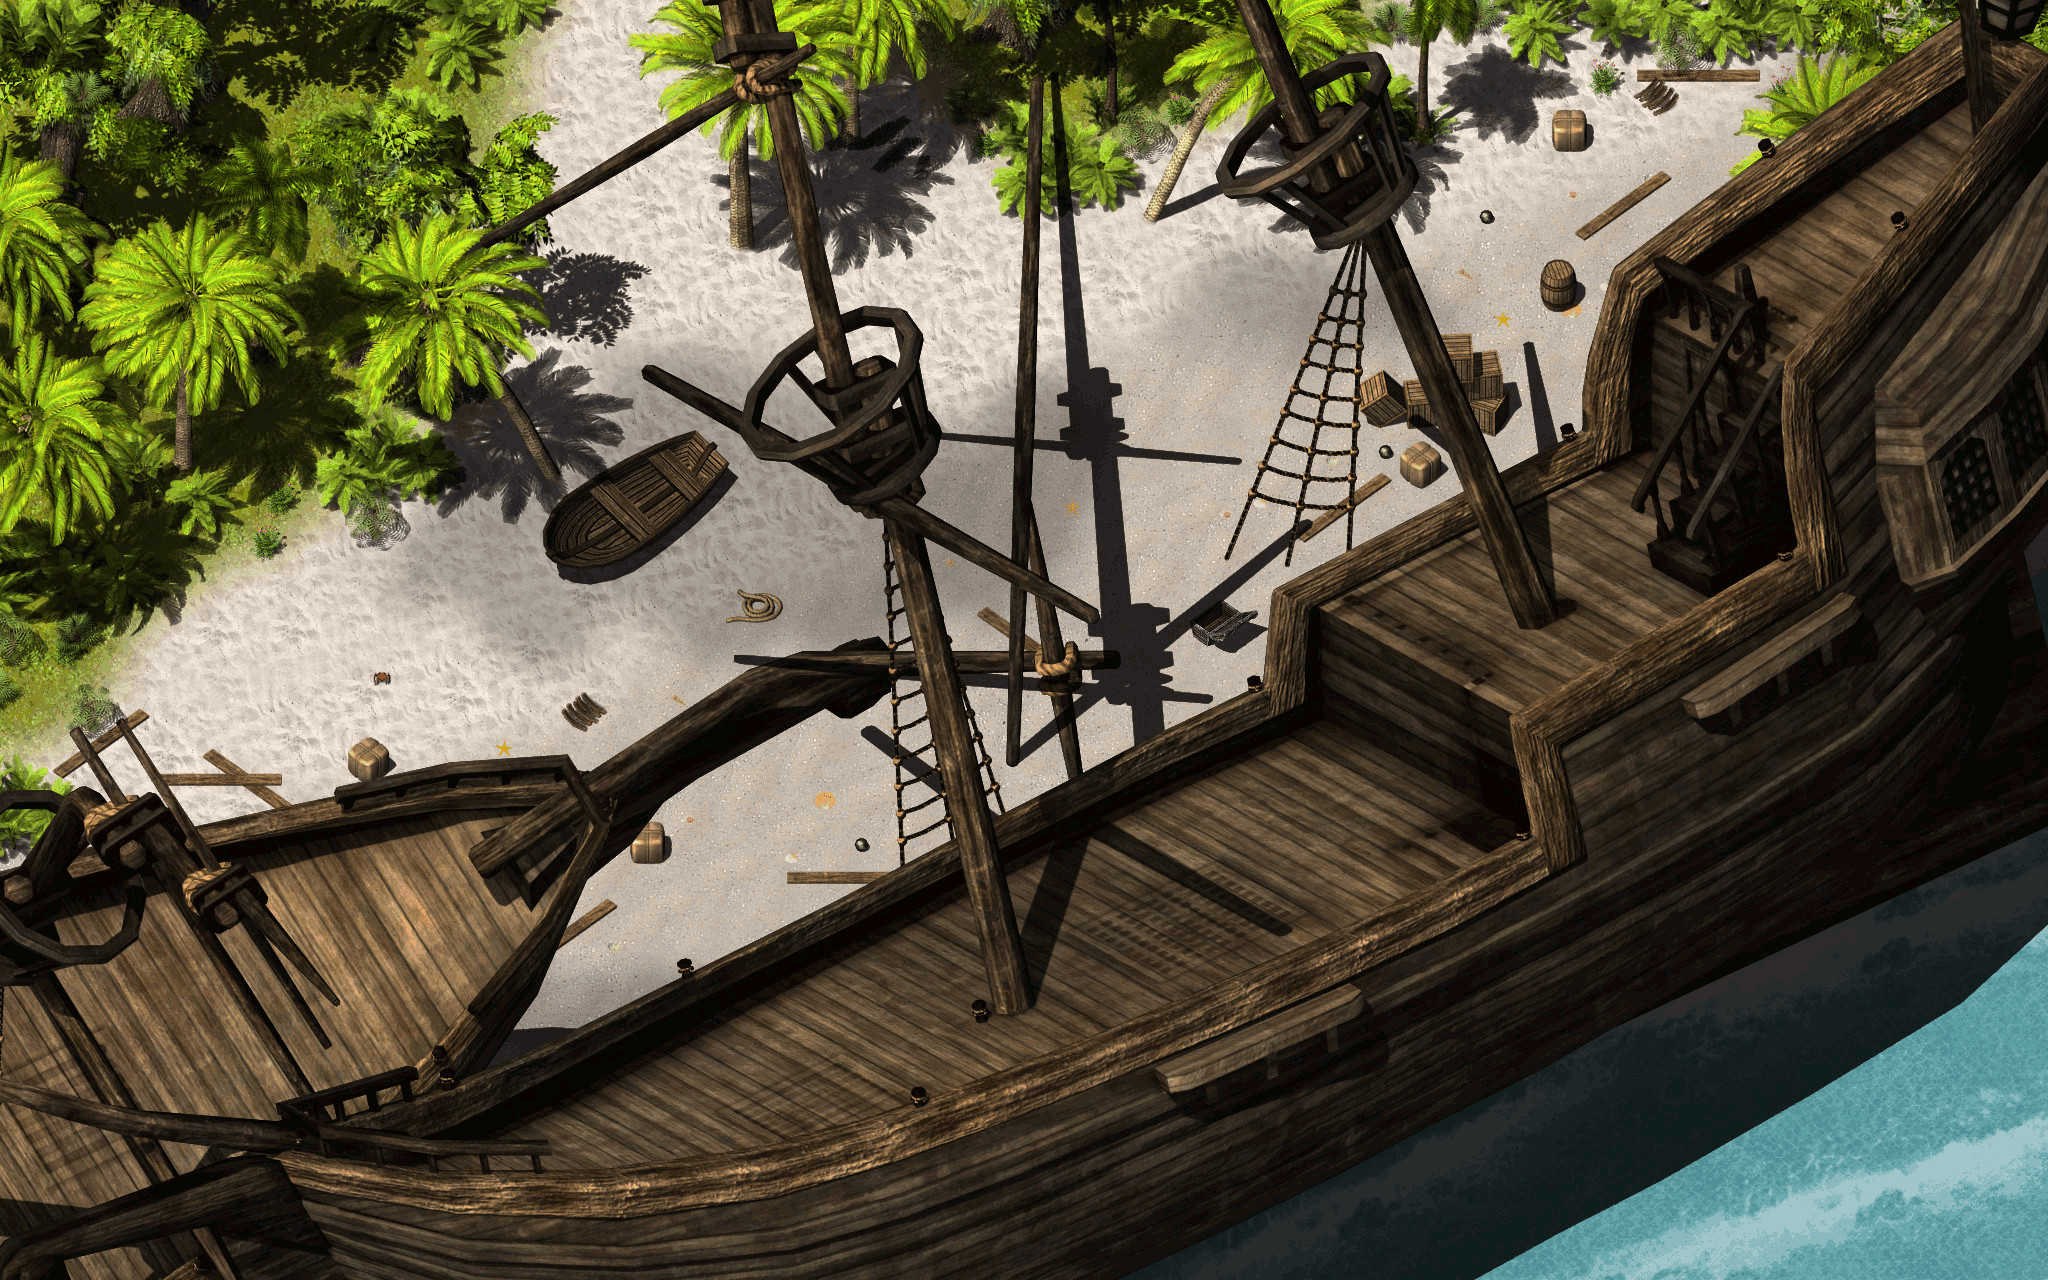 RPG Maker MV - Medieval: High Seas screenshot